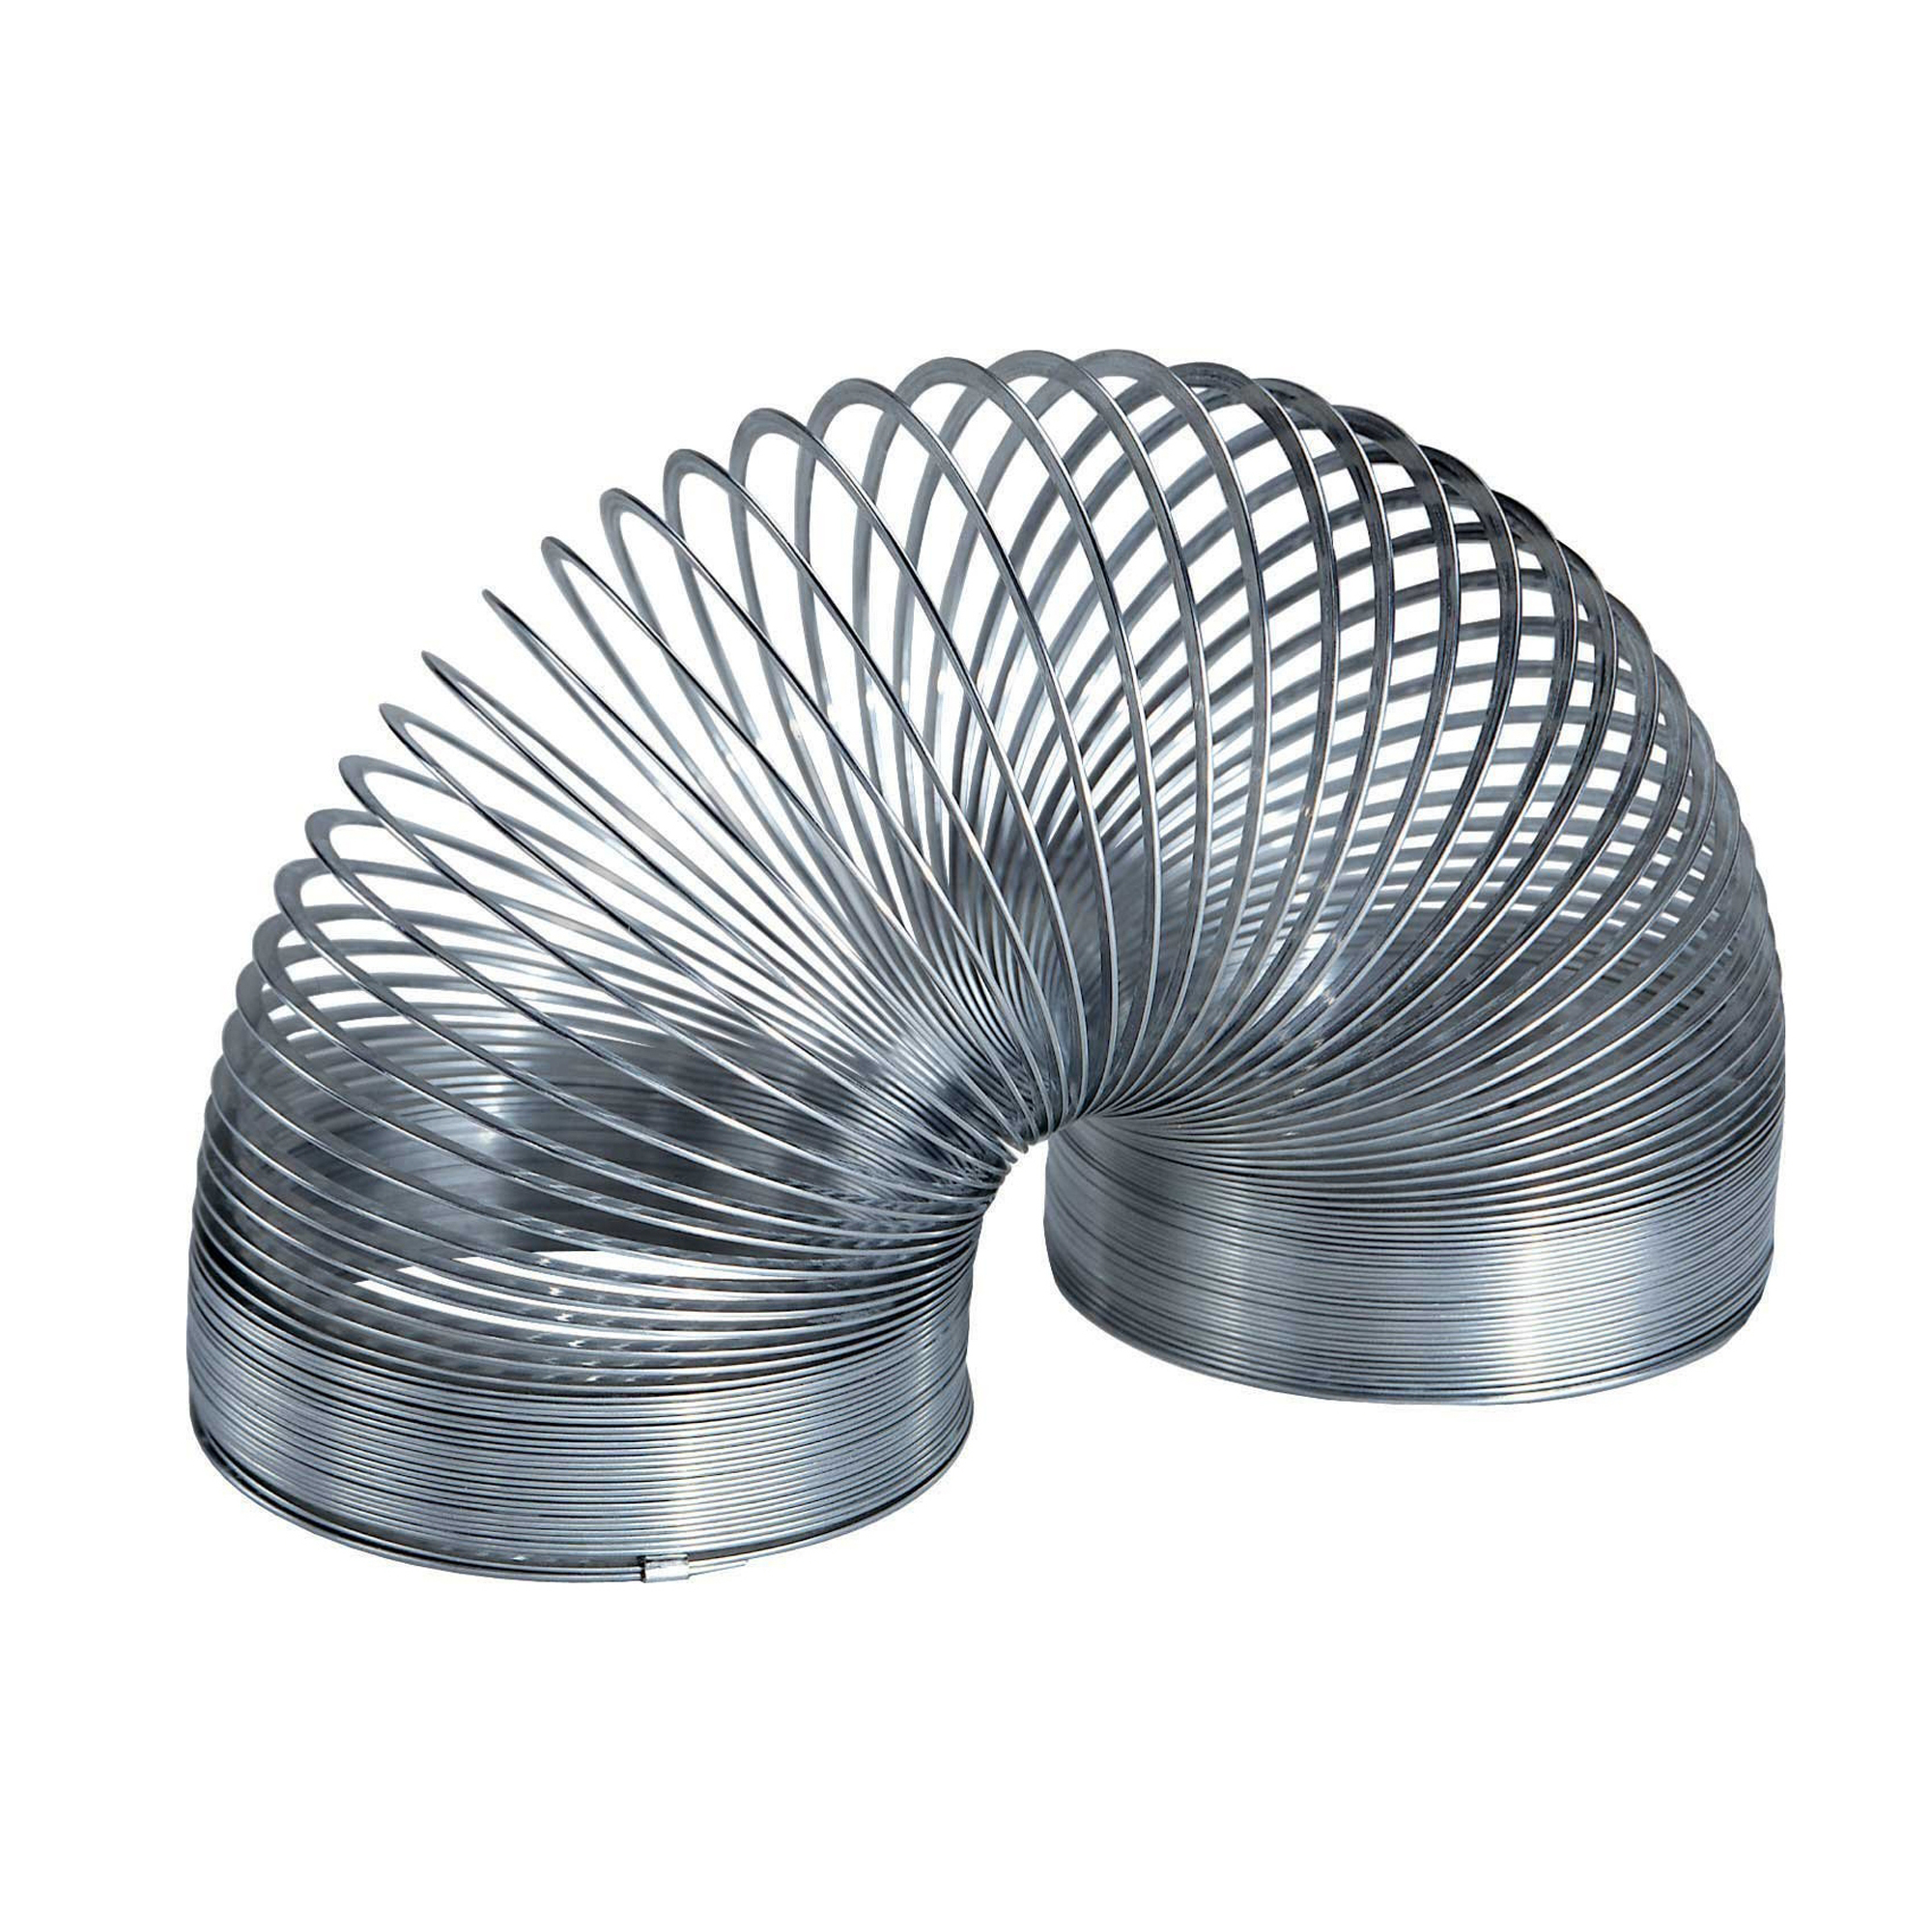 Slinky Metallproduktzoombild #1